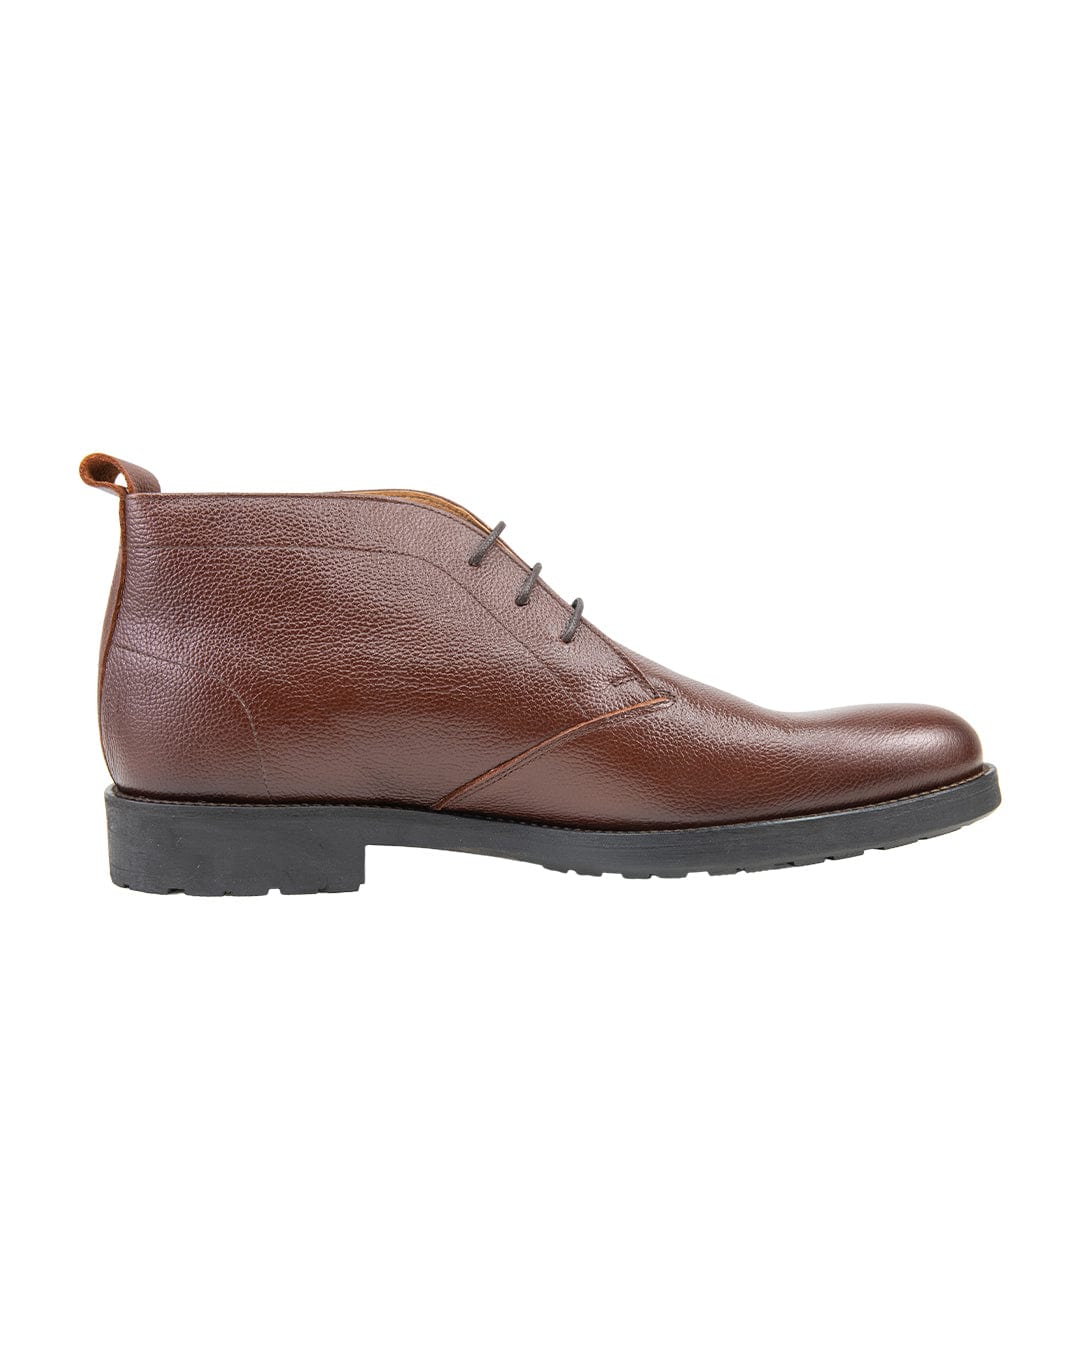 Gagliardi Shoes Gagliardi Brown Scotch Grain Leather Chukka Boots